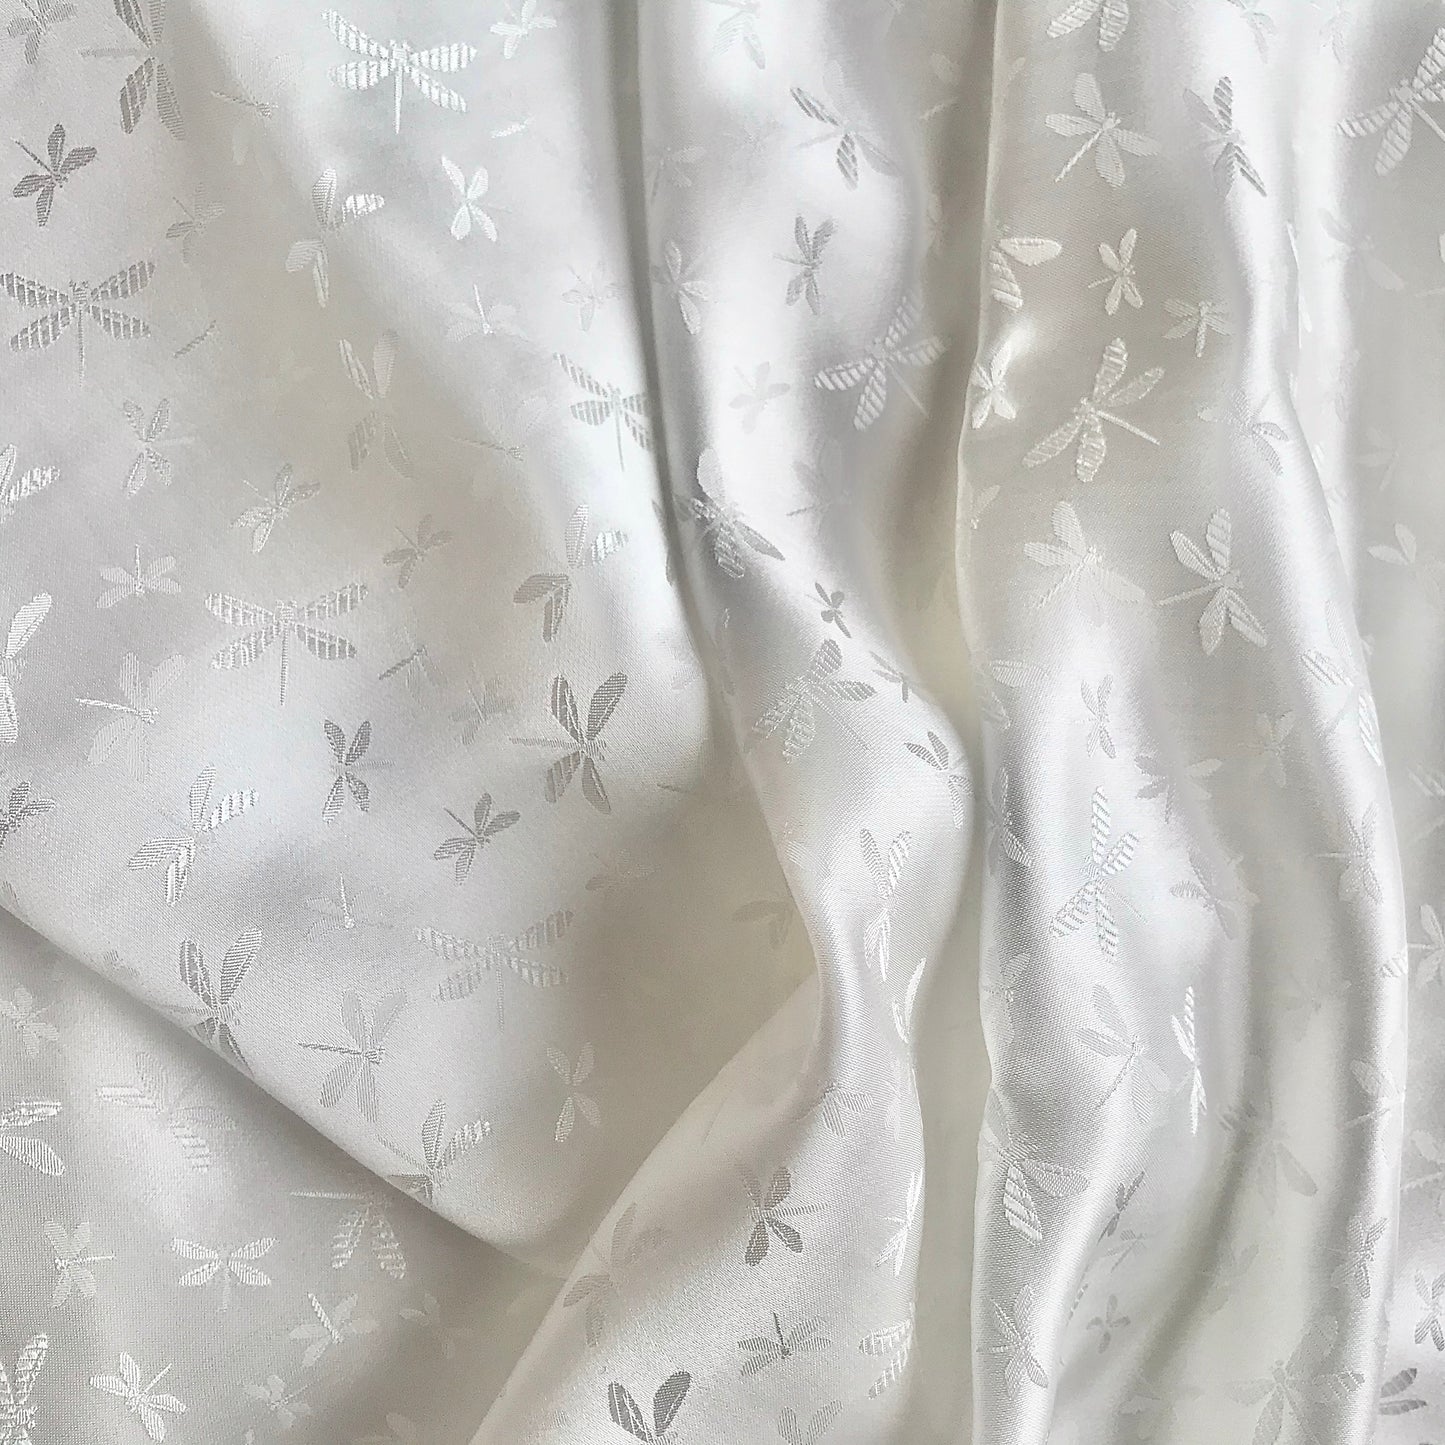 White silk with Dragonfly patterns - PURE MULBERRY SILK fabric by the yard - Gragonfly silk -Luxury Silk - Natural silk - Handmade in VietNam